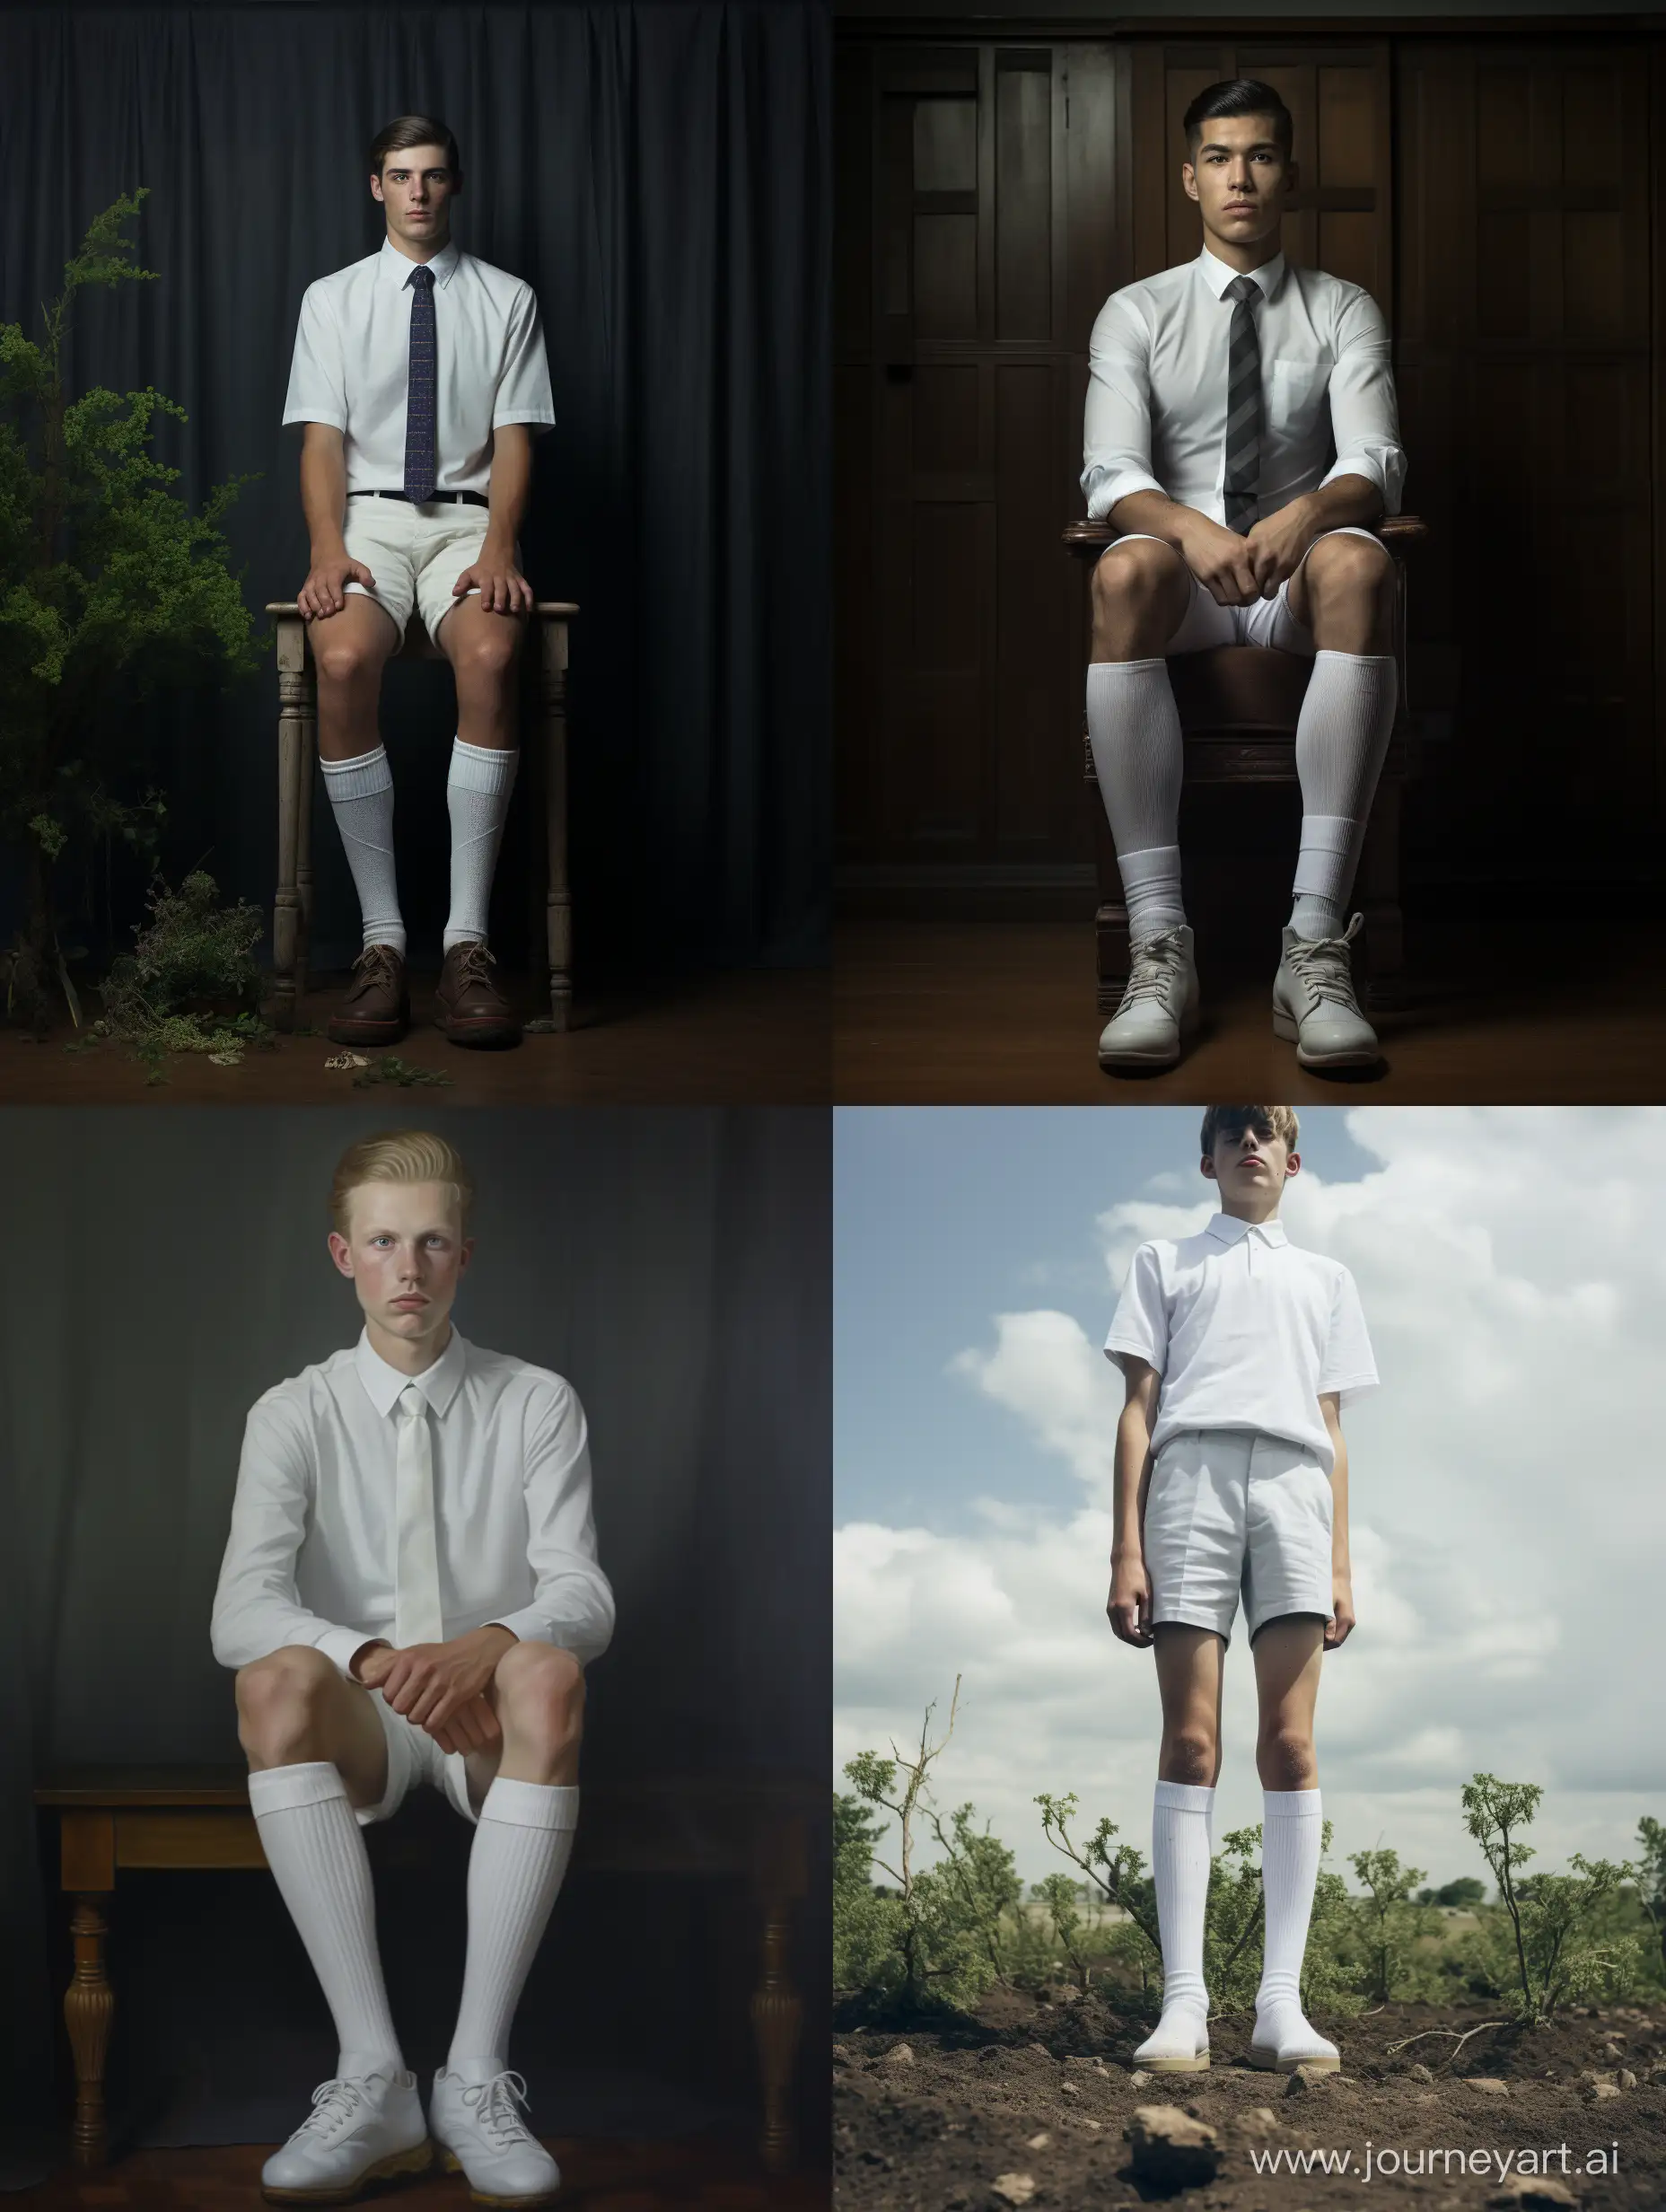 Stylish-Man-in-White-KneeHigh-Socks-Artistic-Portrait-with-AR-Twist